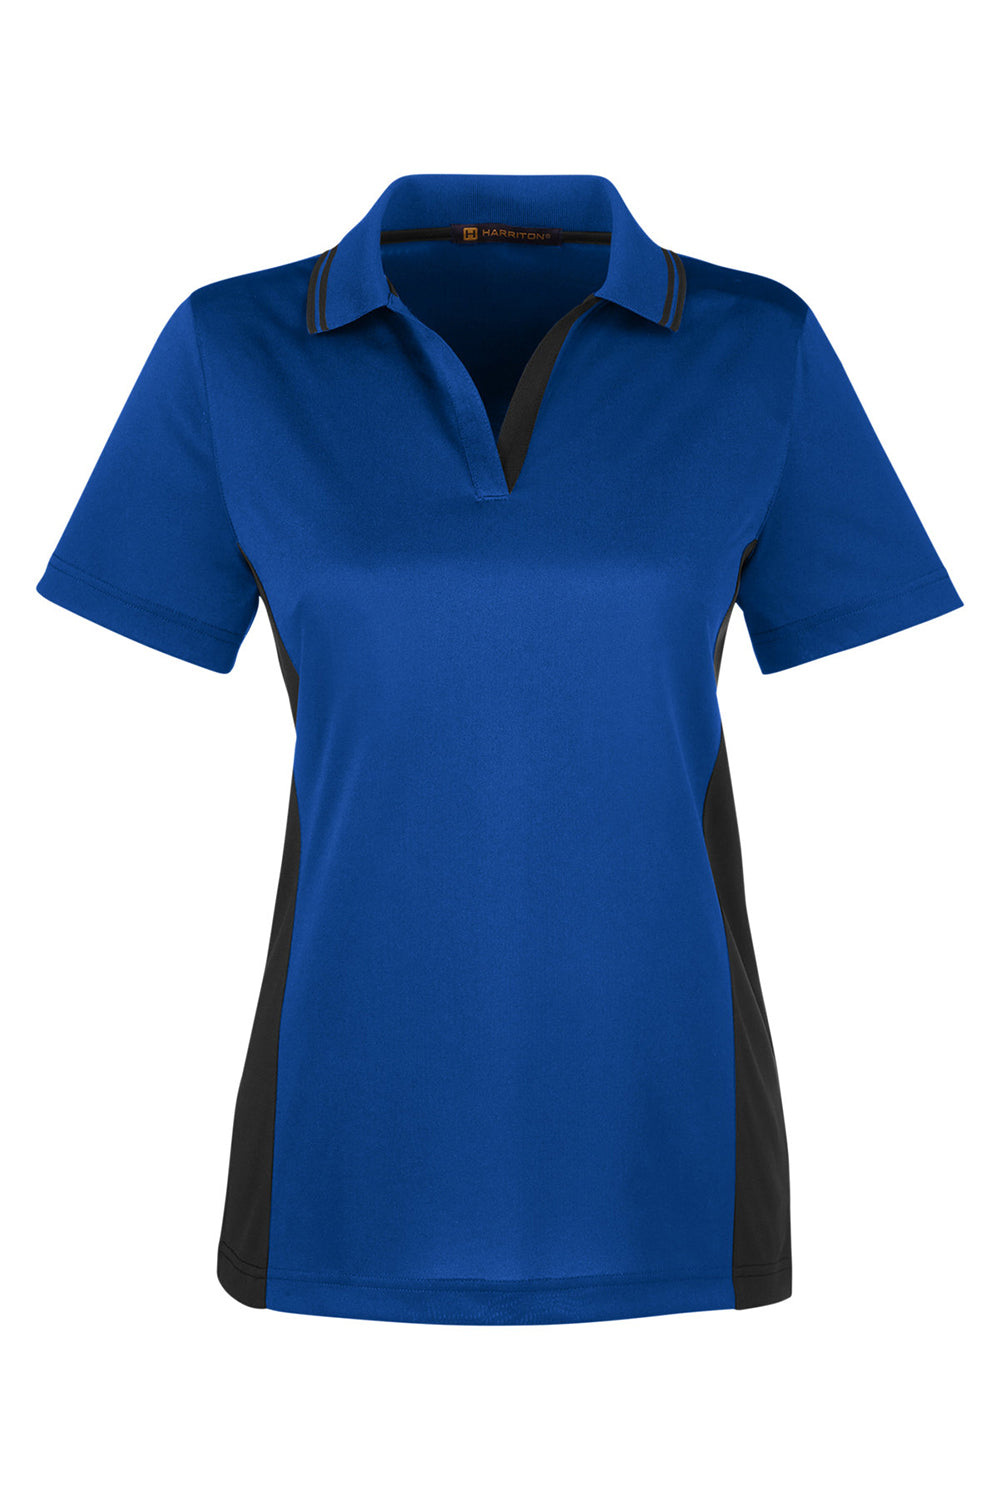 Harriton M386W Womens Flash Performance Moisture Wicking Colorblock Short Sleeve Polo Shirt True Royal Blue/Black Flat Front